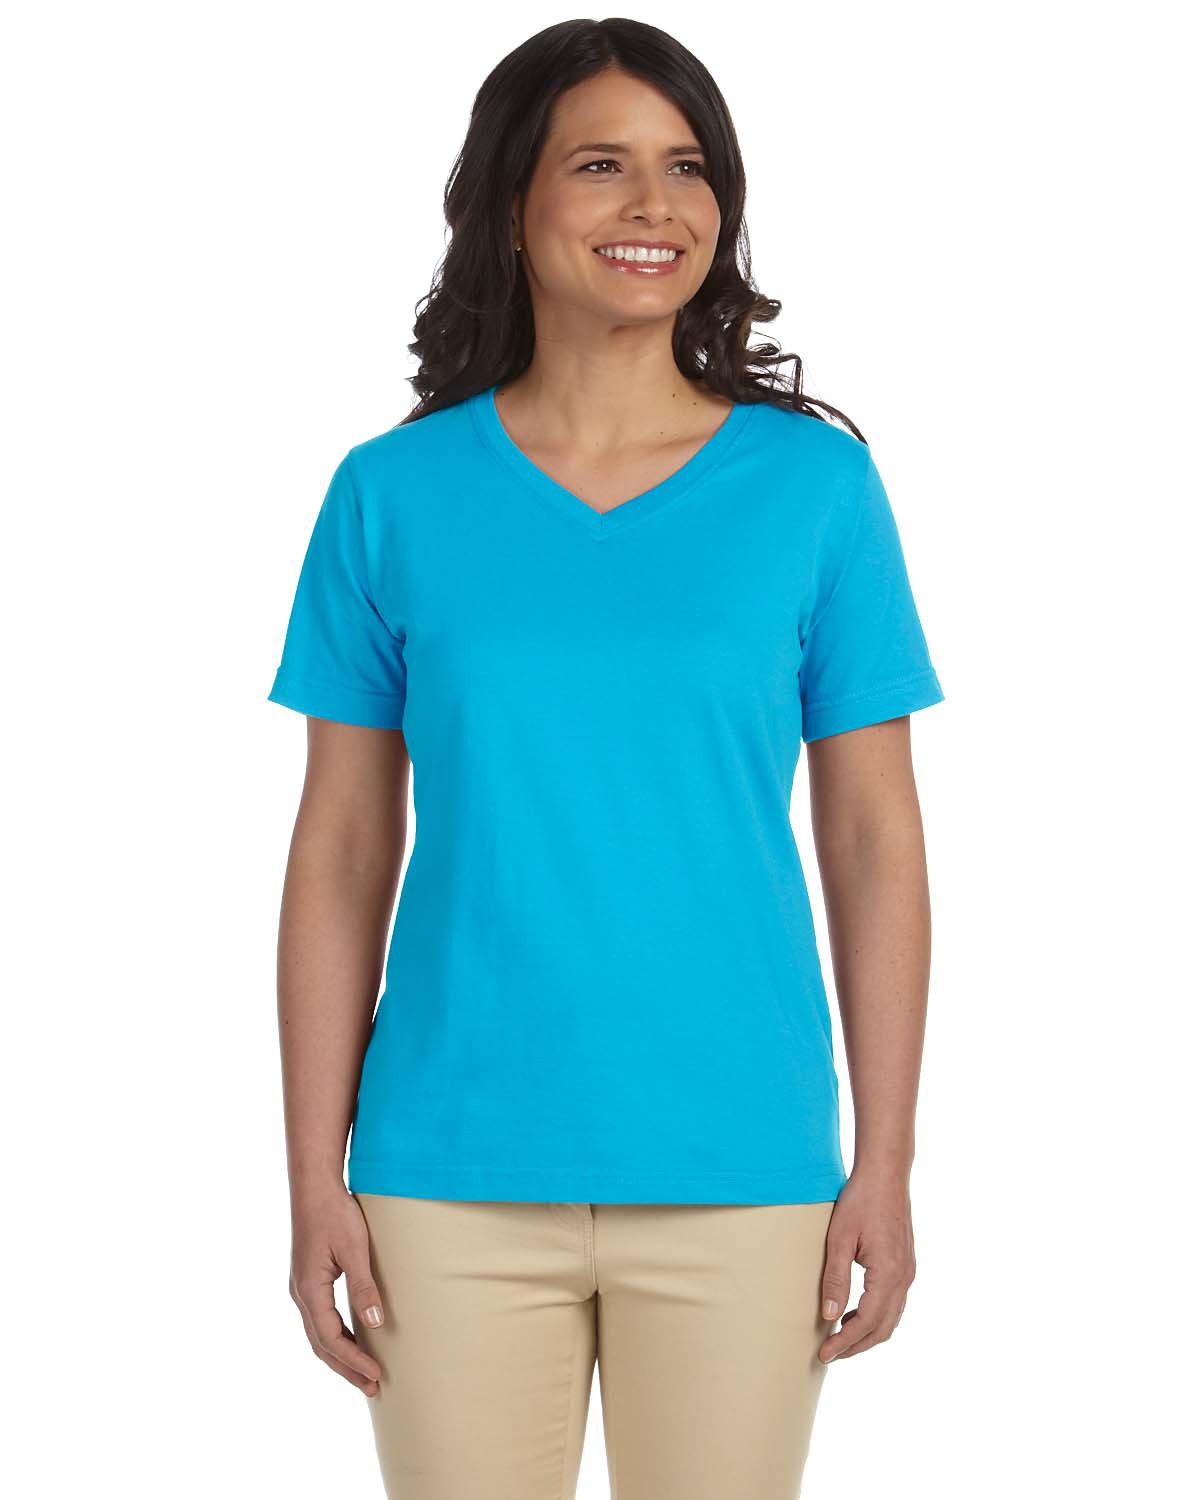 L.A.T Ladies' L-3587 - Combed Ringspun Jersey V-Neck T-Shirt